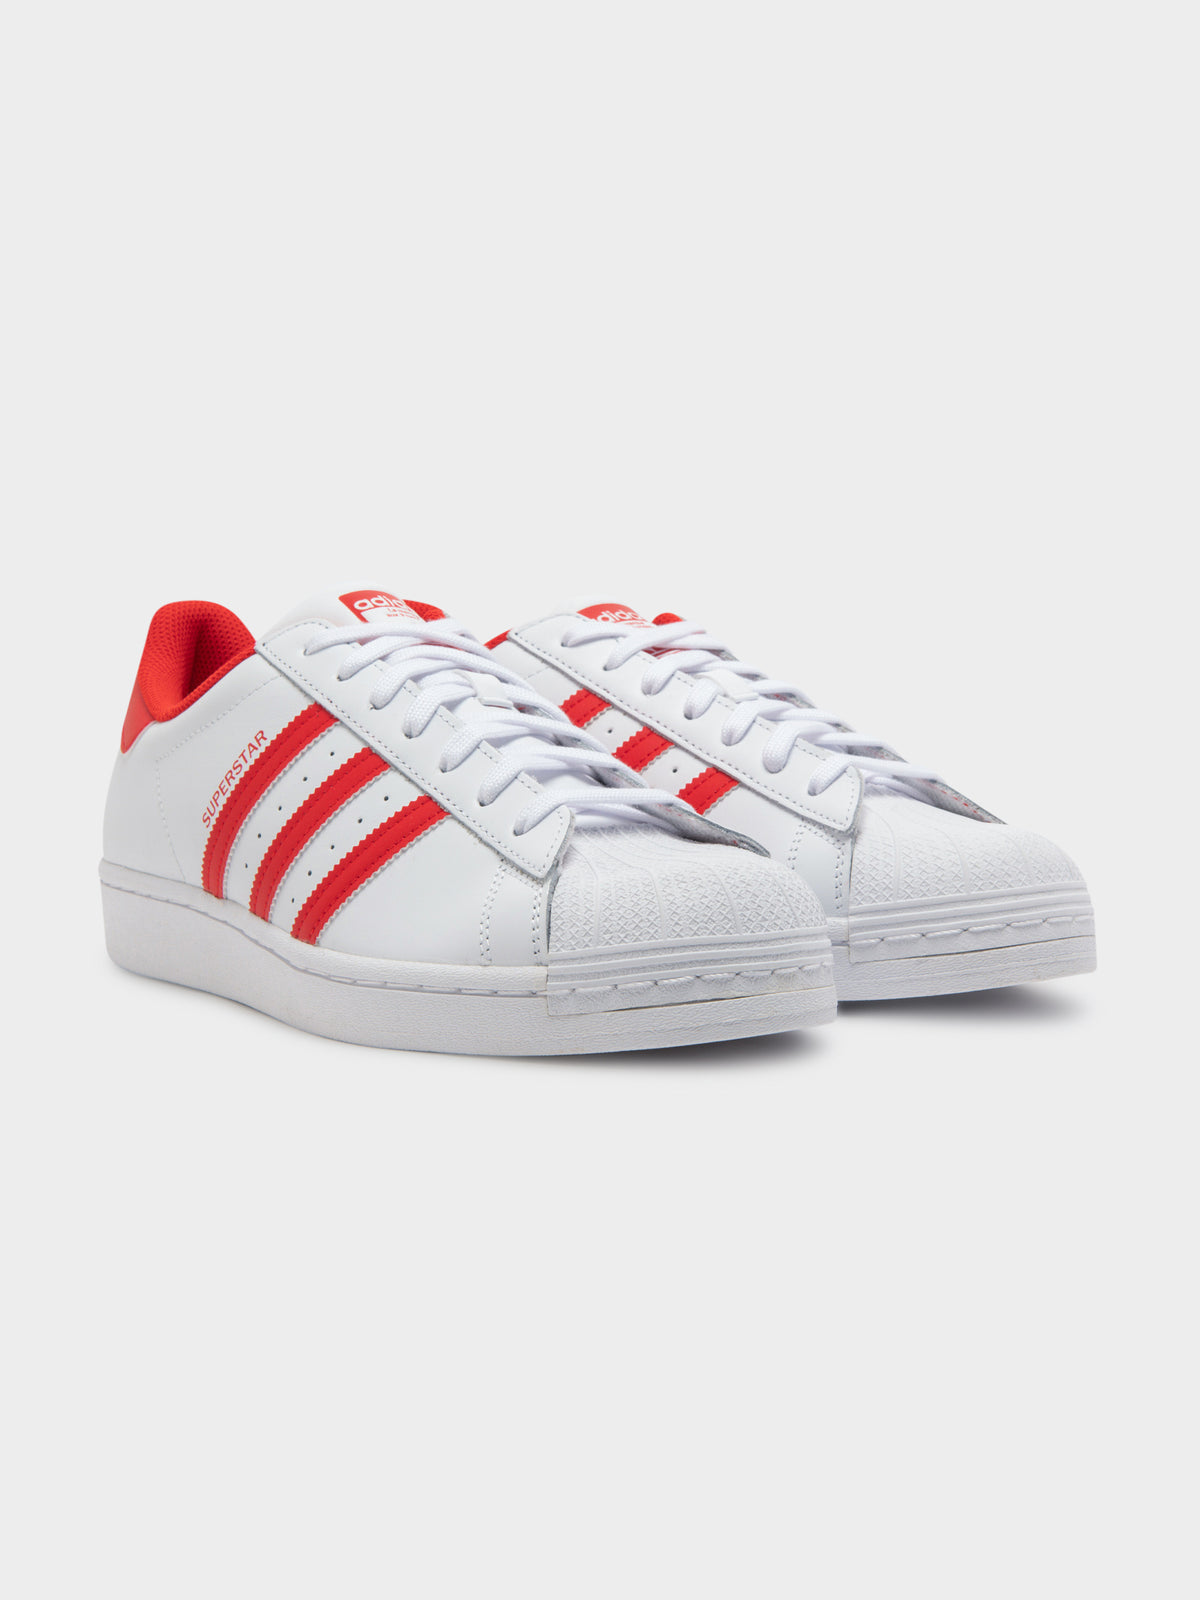 Unisex Superstar Shoe in Vivid Red &amp; Cloud White